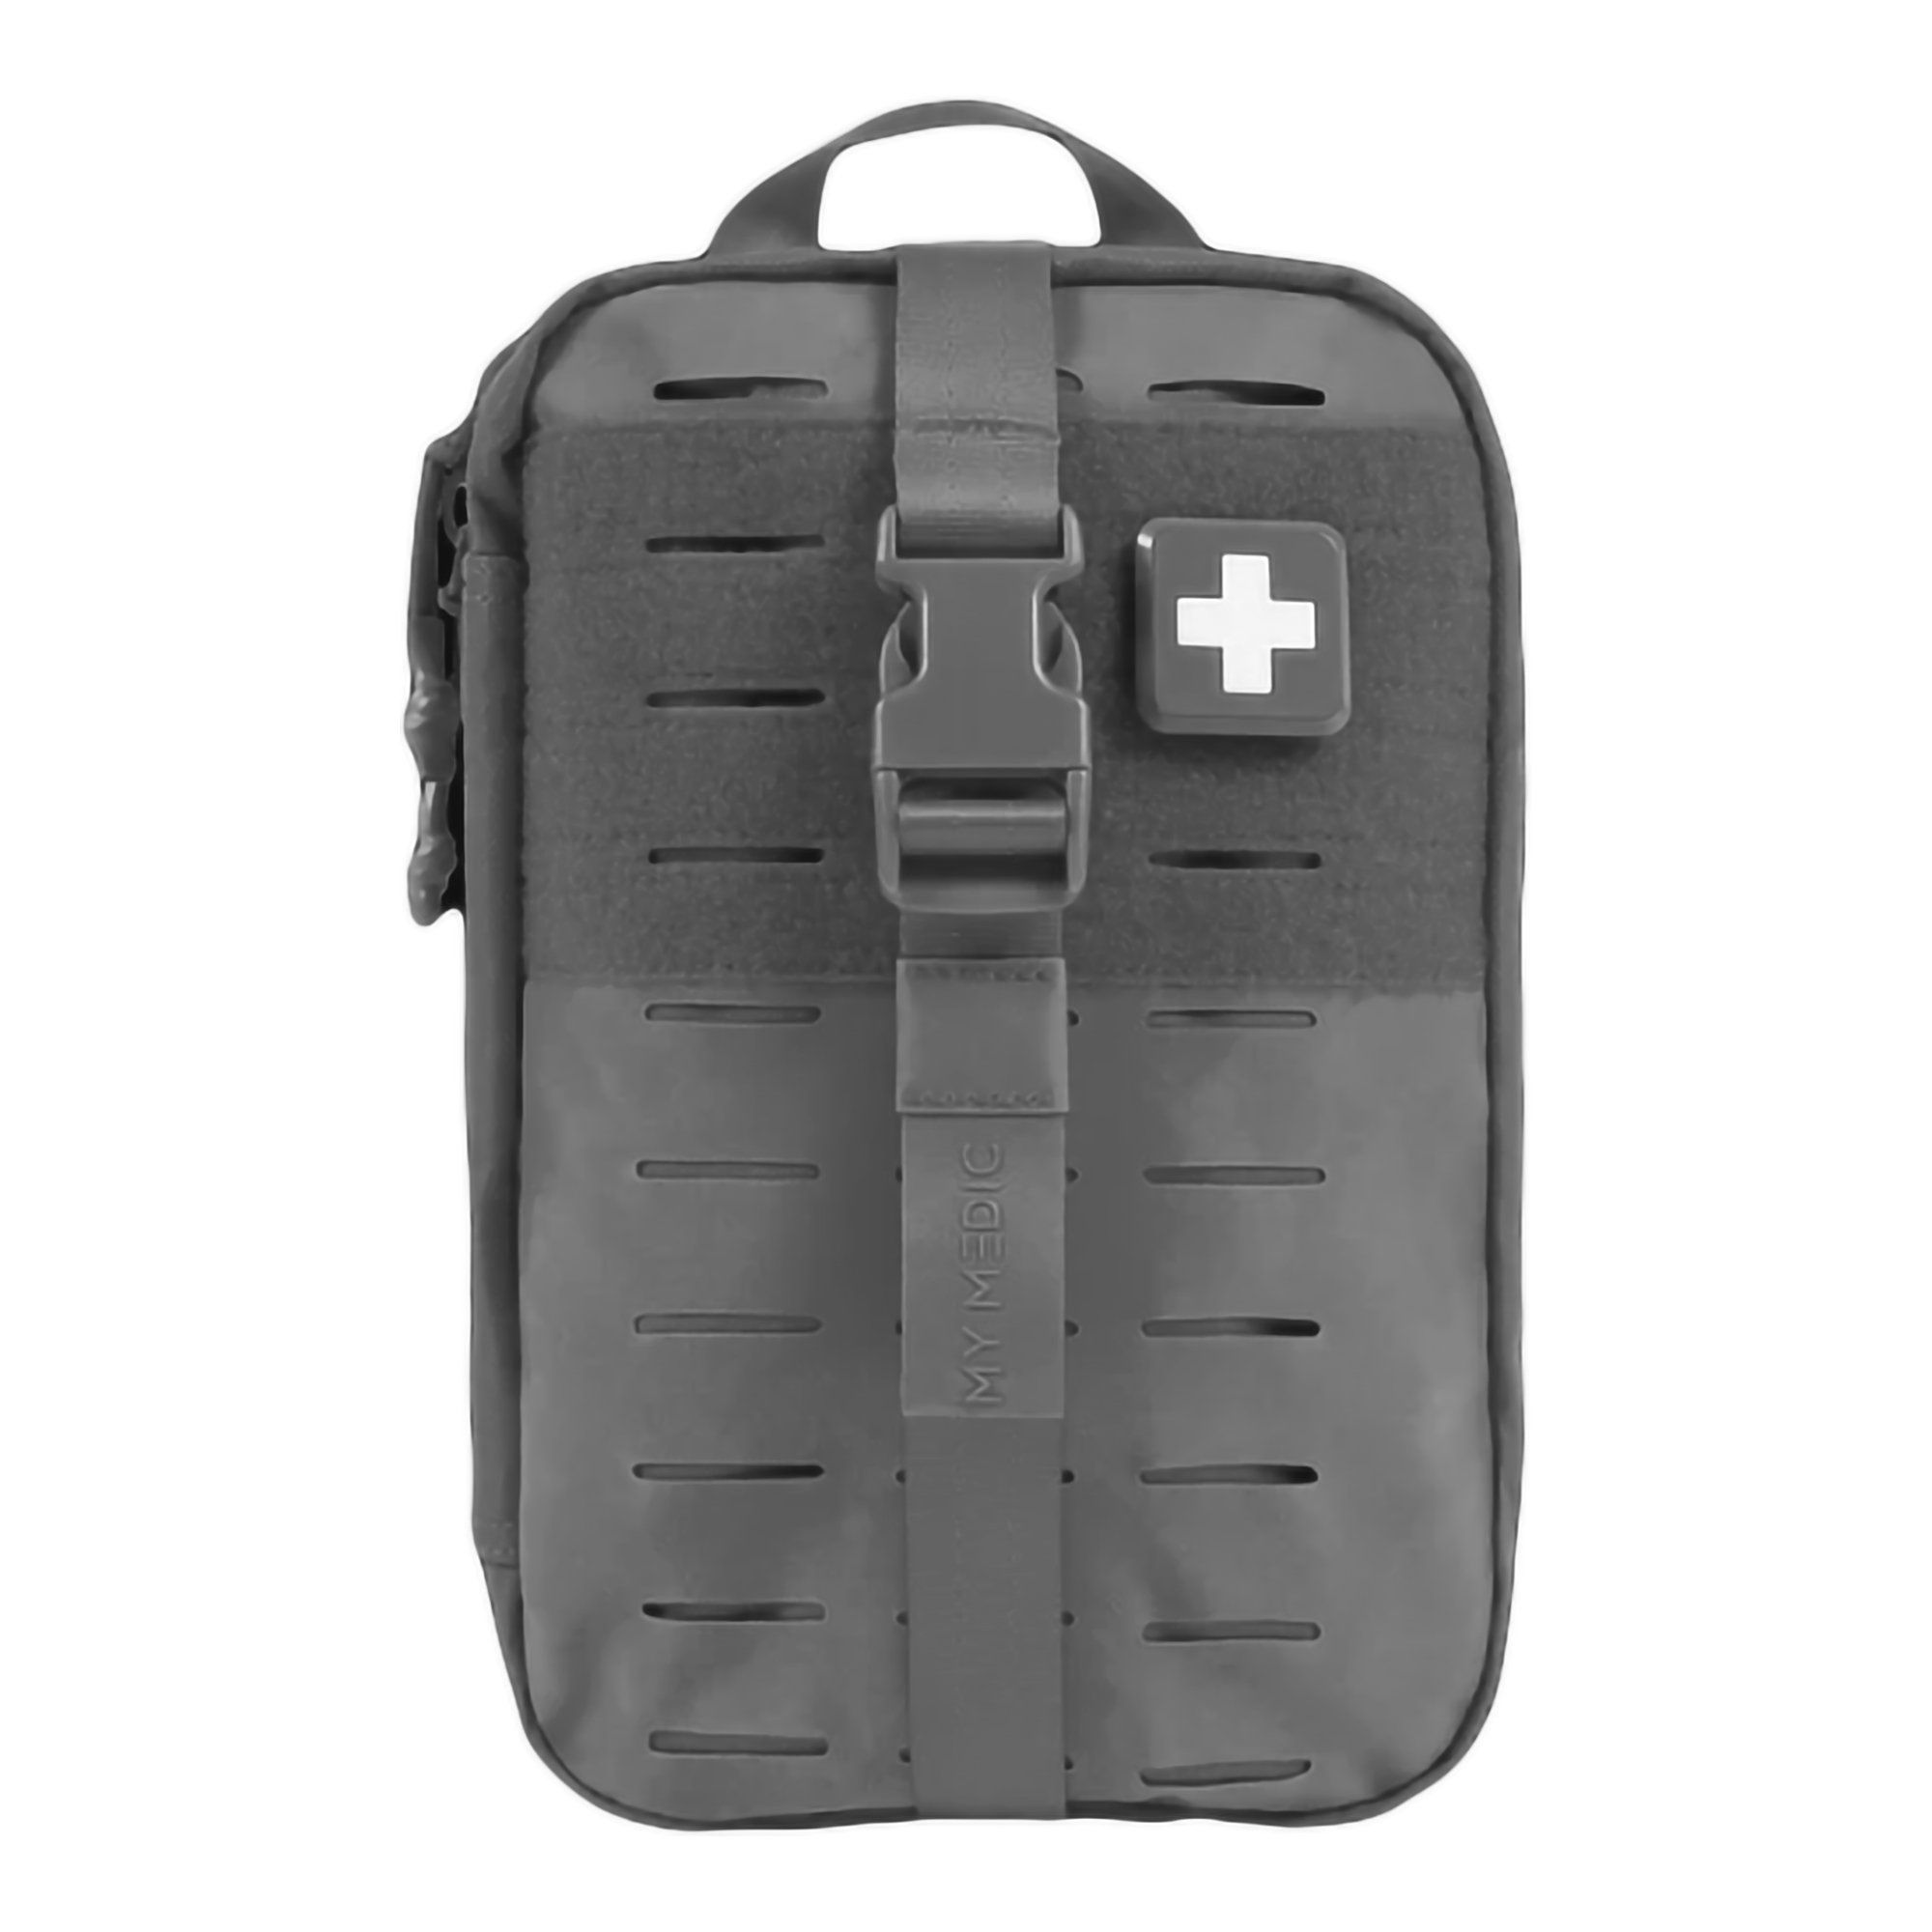 My Medic - MYFAK PRO First Aid Kit - Gray